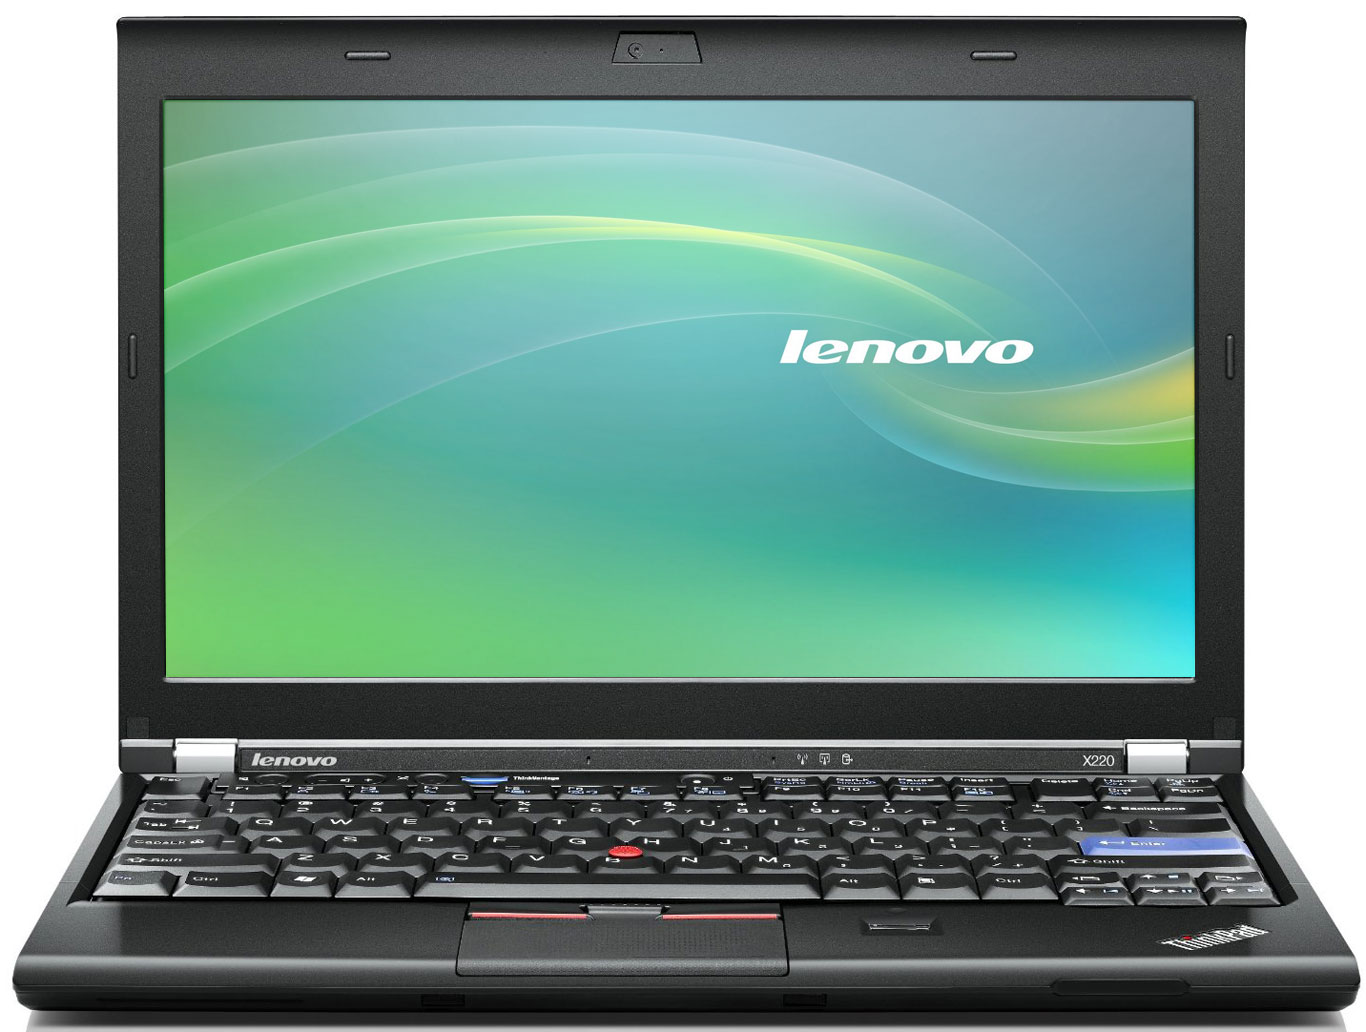 Lenovo Thinkpad X220 Pictures Amnay Technology